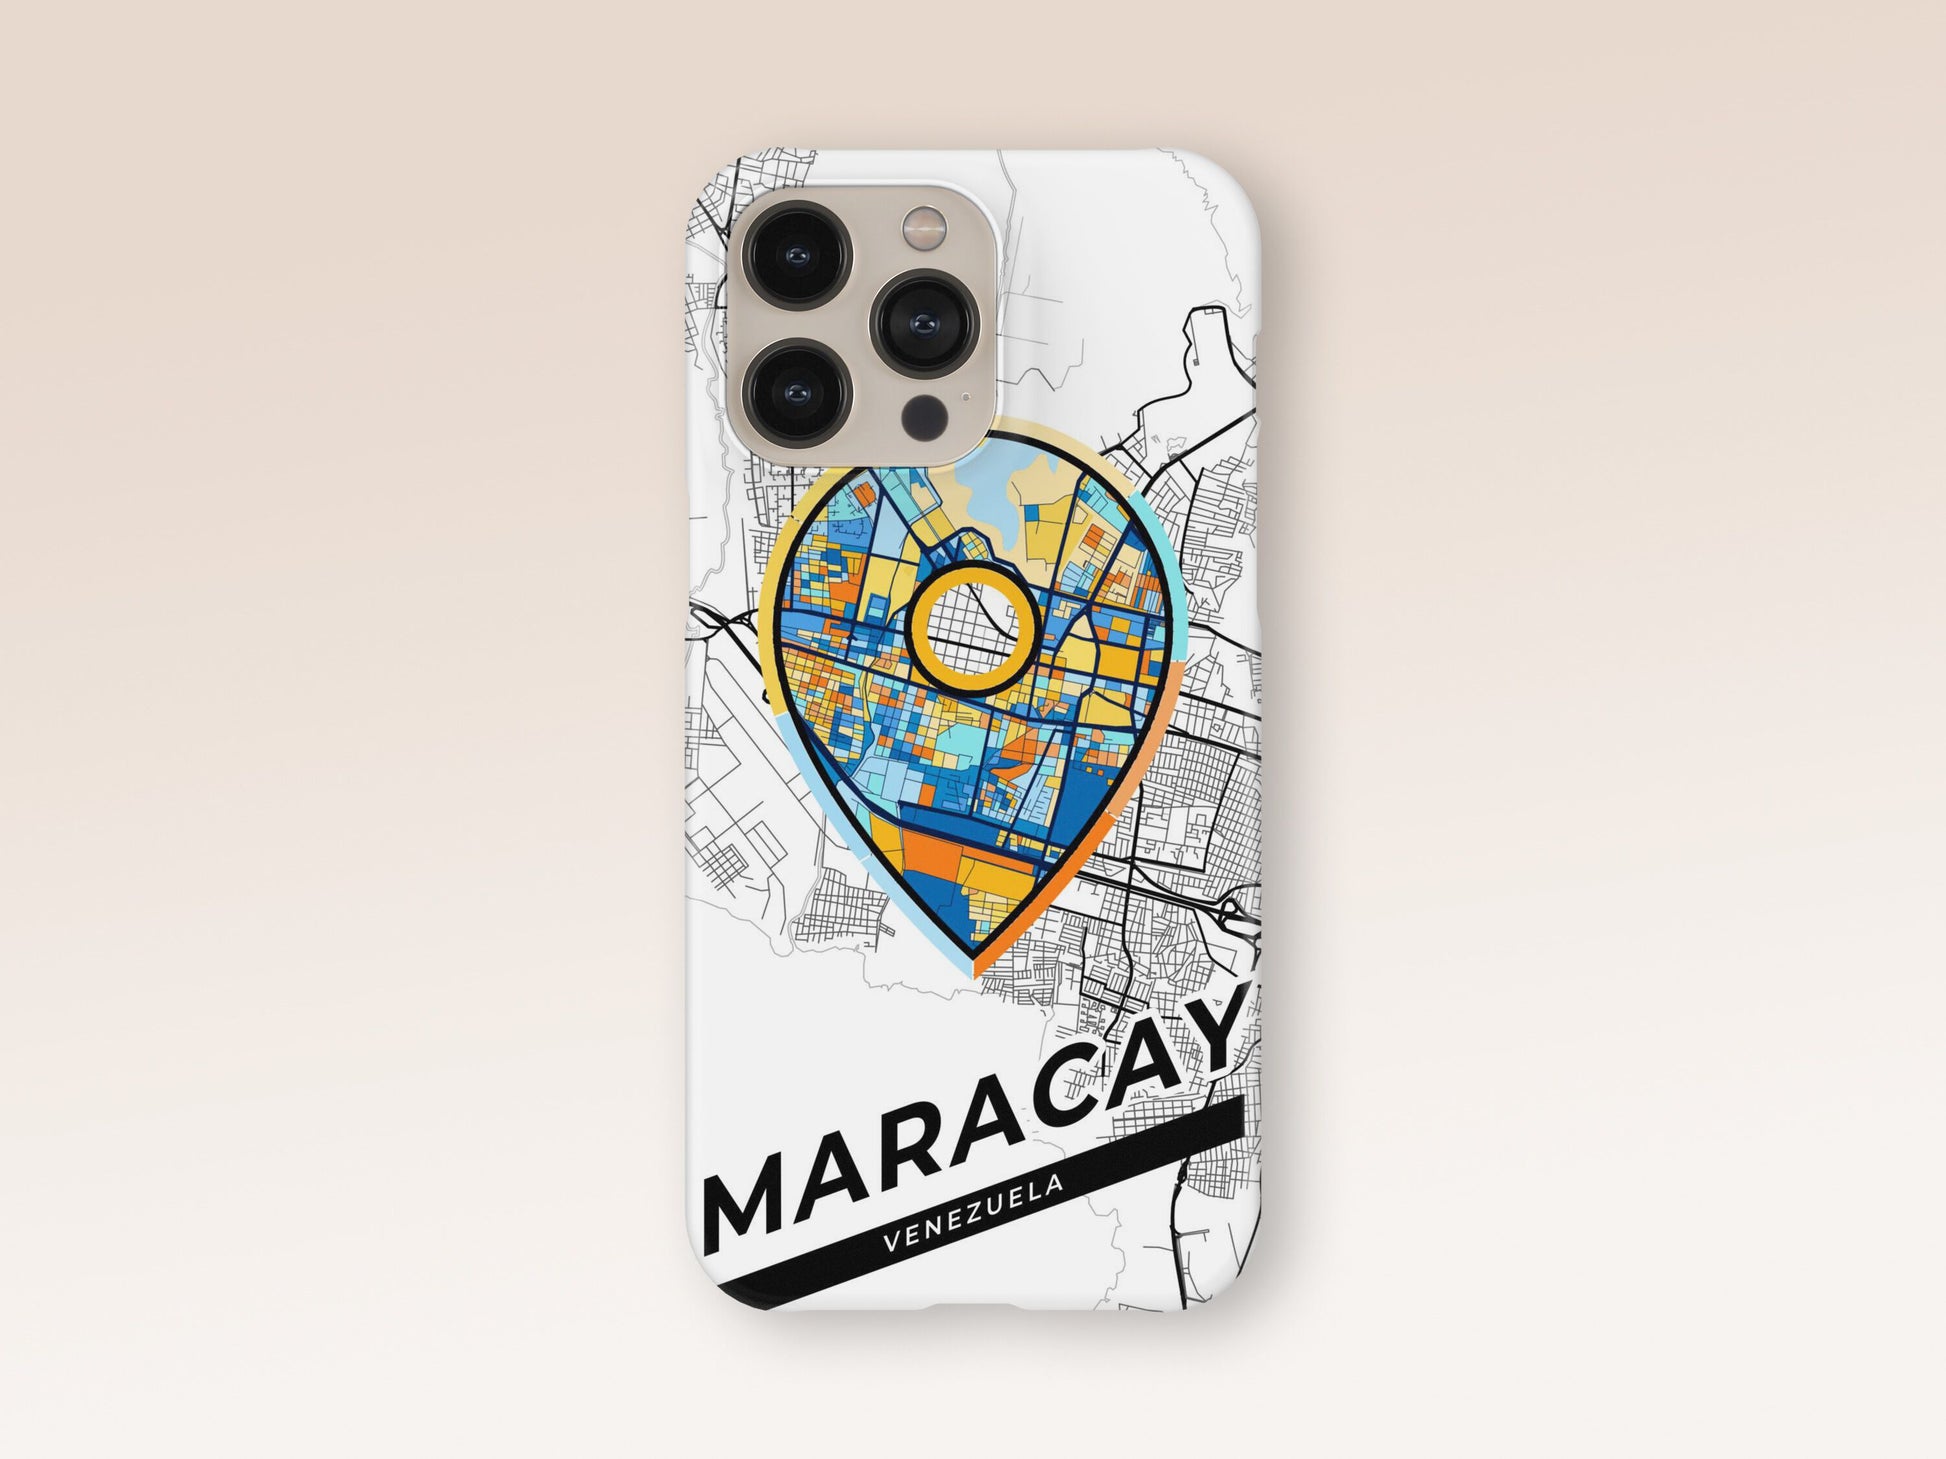 Maracay Venezuela slim phone case with colorful icon. Birthday, wedding or housewarming gift. Couple match cases. 1